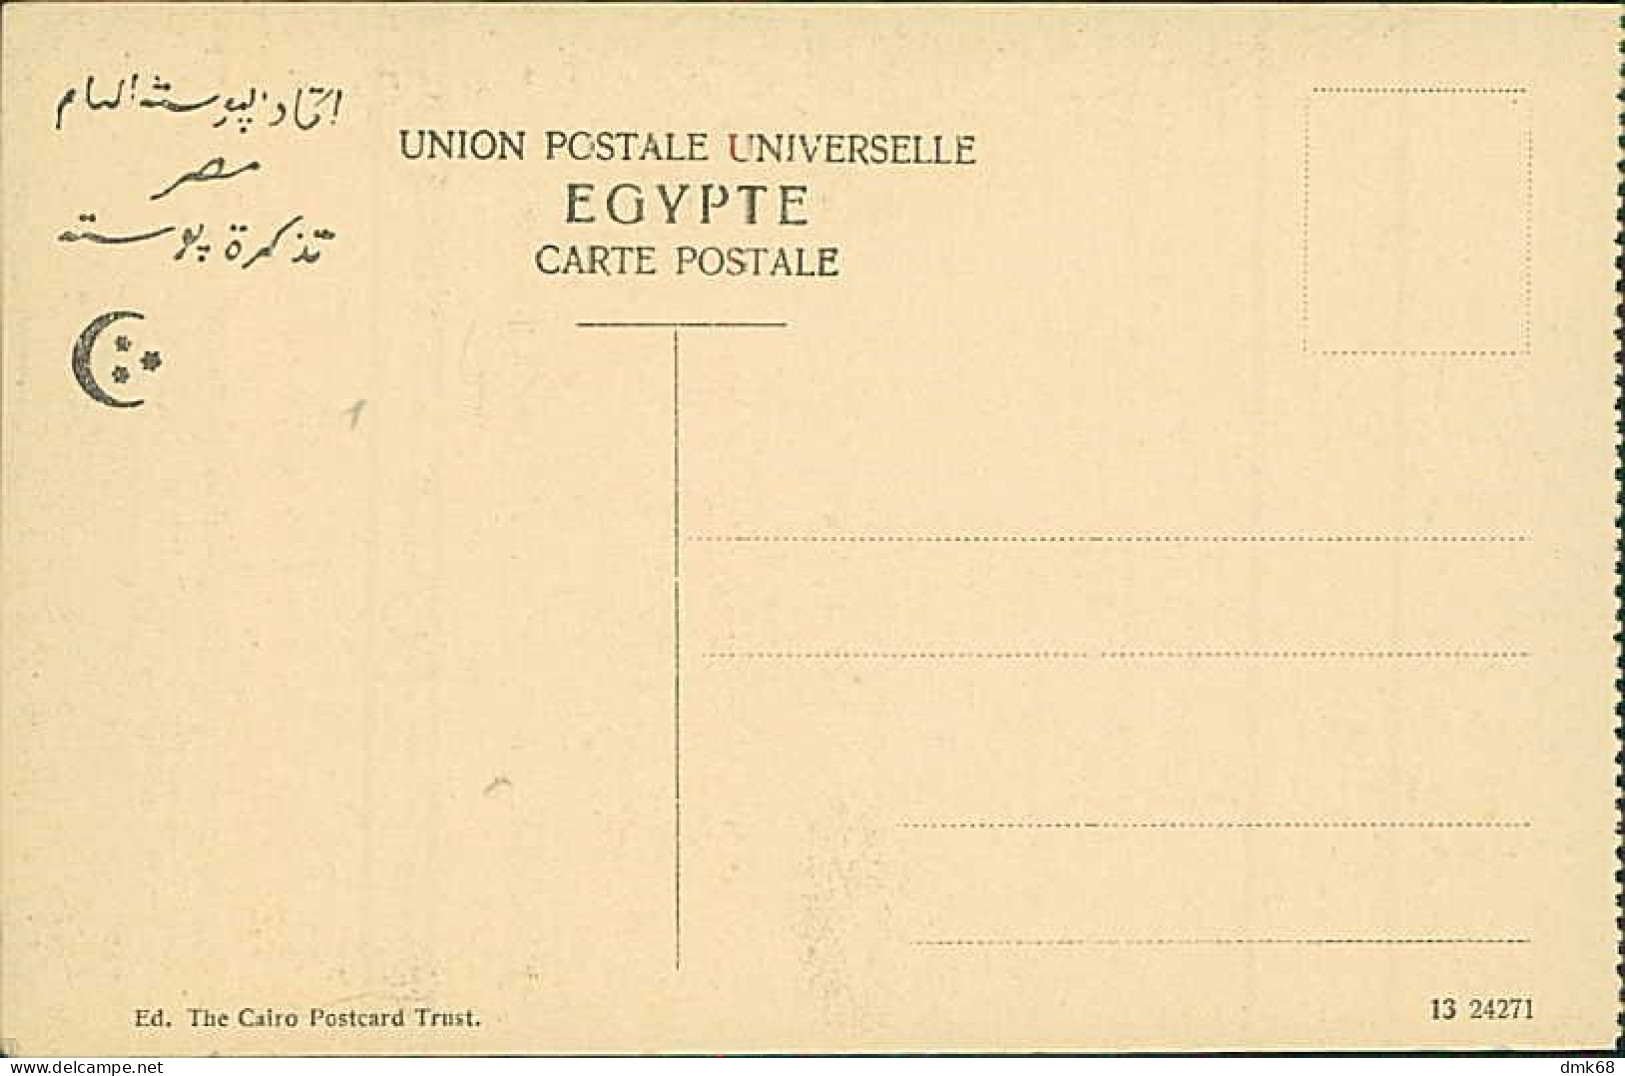 EGYPT - ALEXANDRIA / ALEXANDRIE - PLACE MOHAMED ALY - EDIT THE CAIRO POSTCARD TRUST - 1910s (12611) - Alexandria